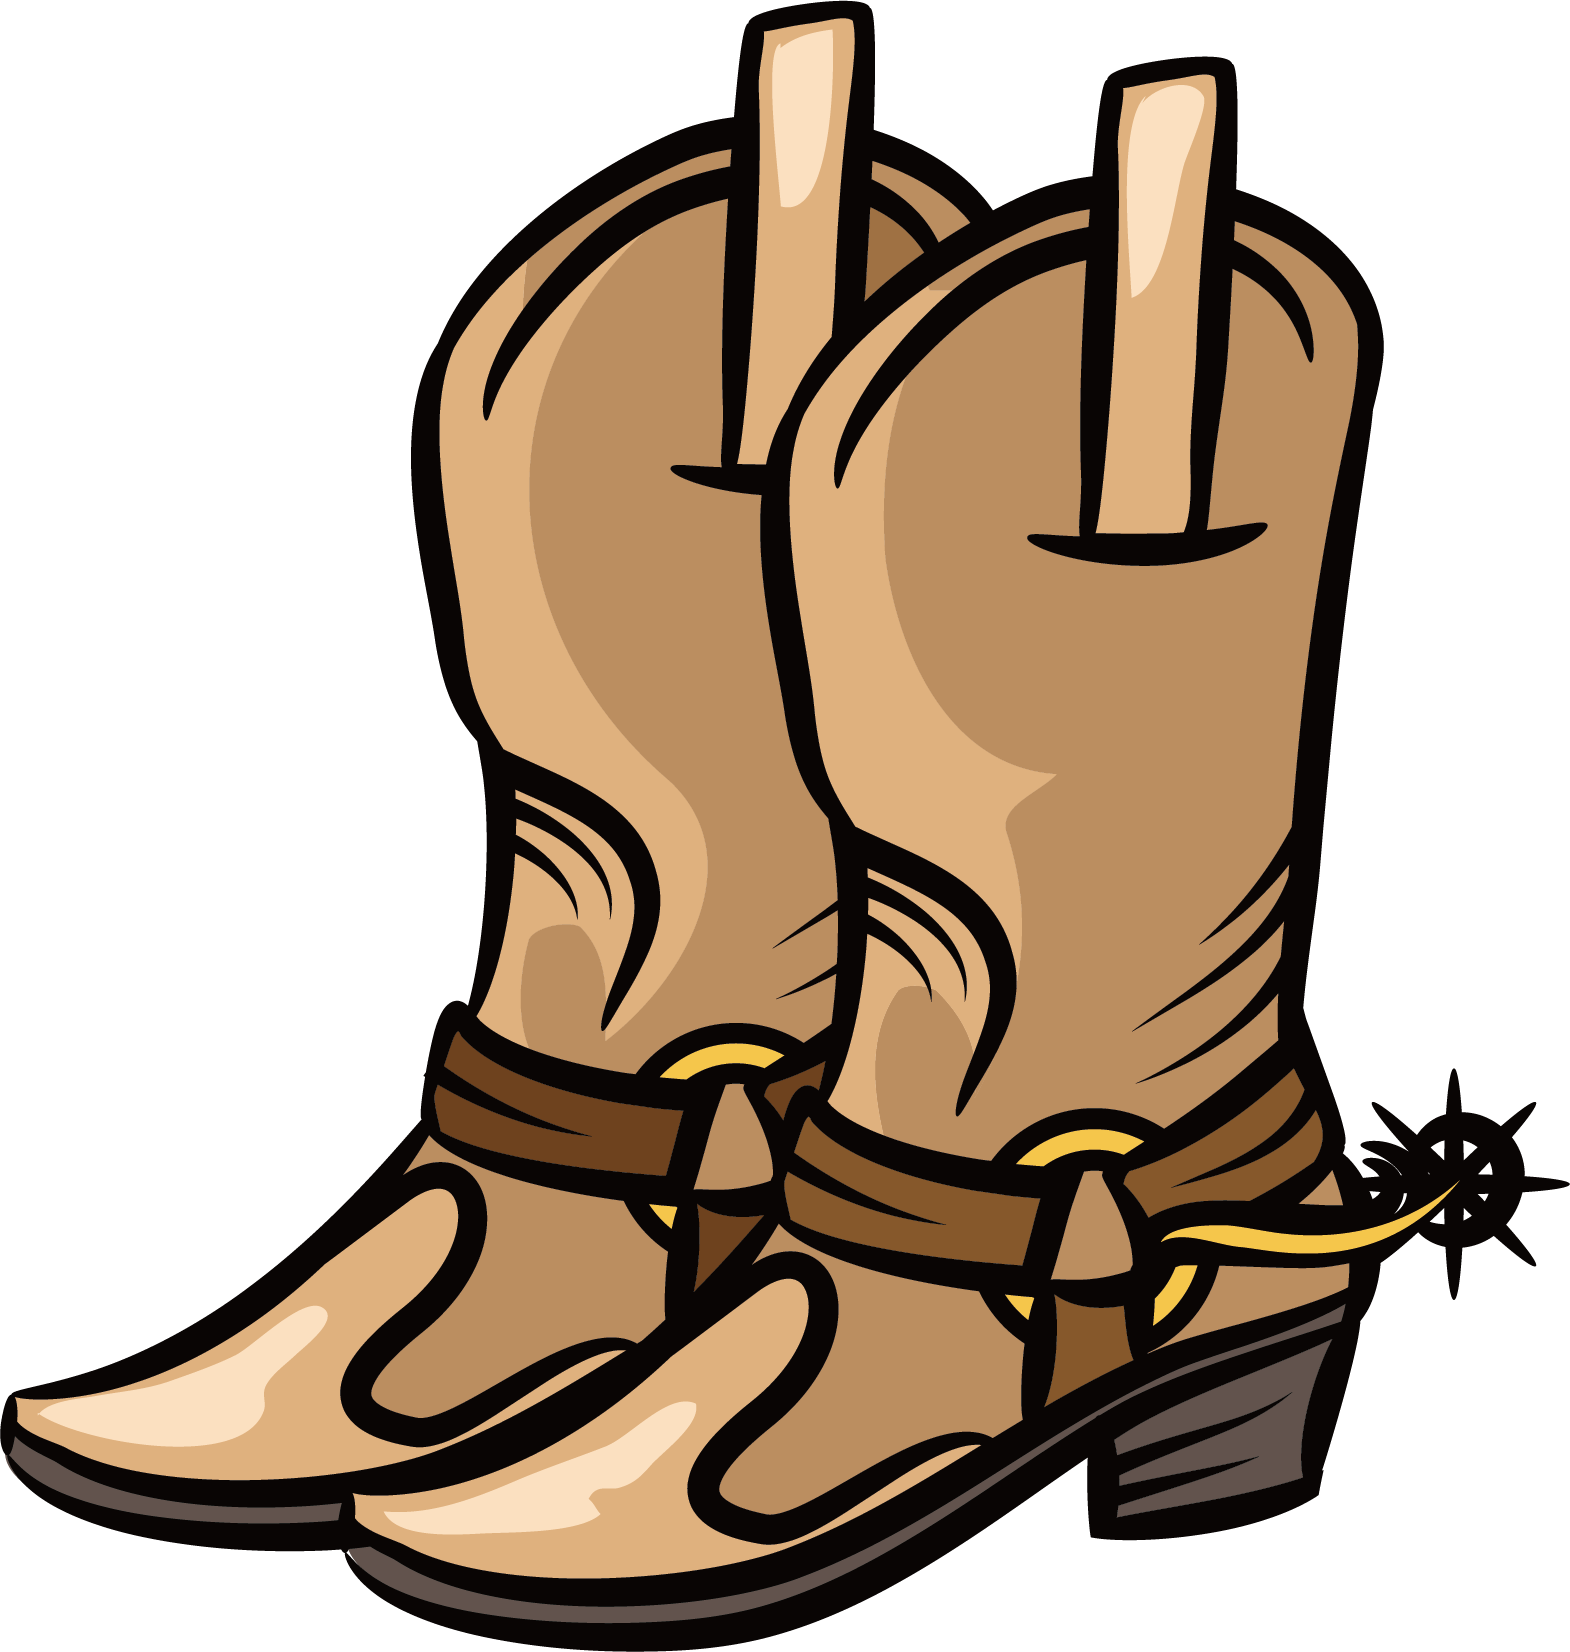 Cowboy boot Shoe Clip art - Boots png vector material png download -  1570*1652 - Free Transparent Cowboy Boot png Download. - Clip Art Library